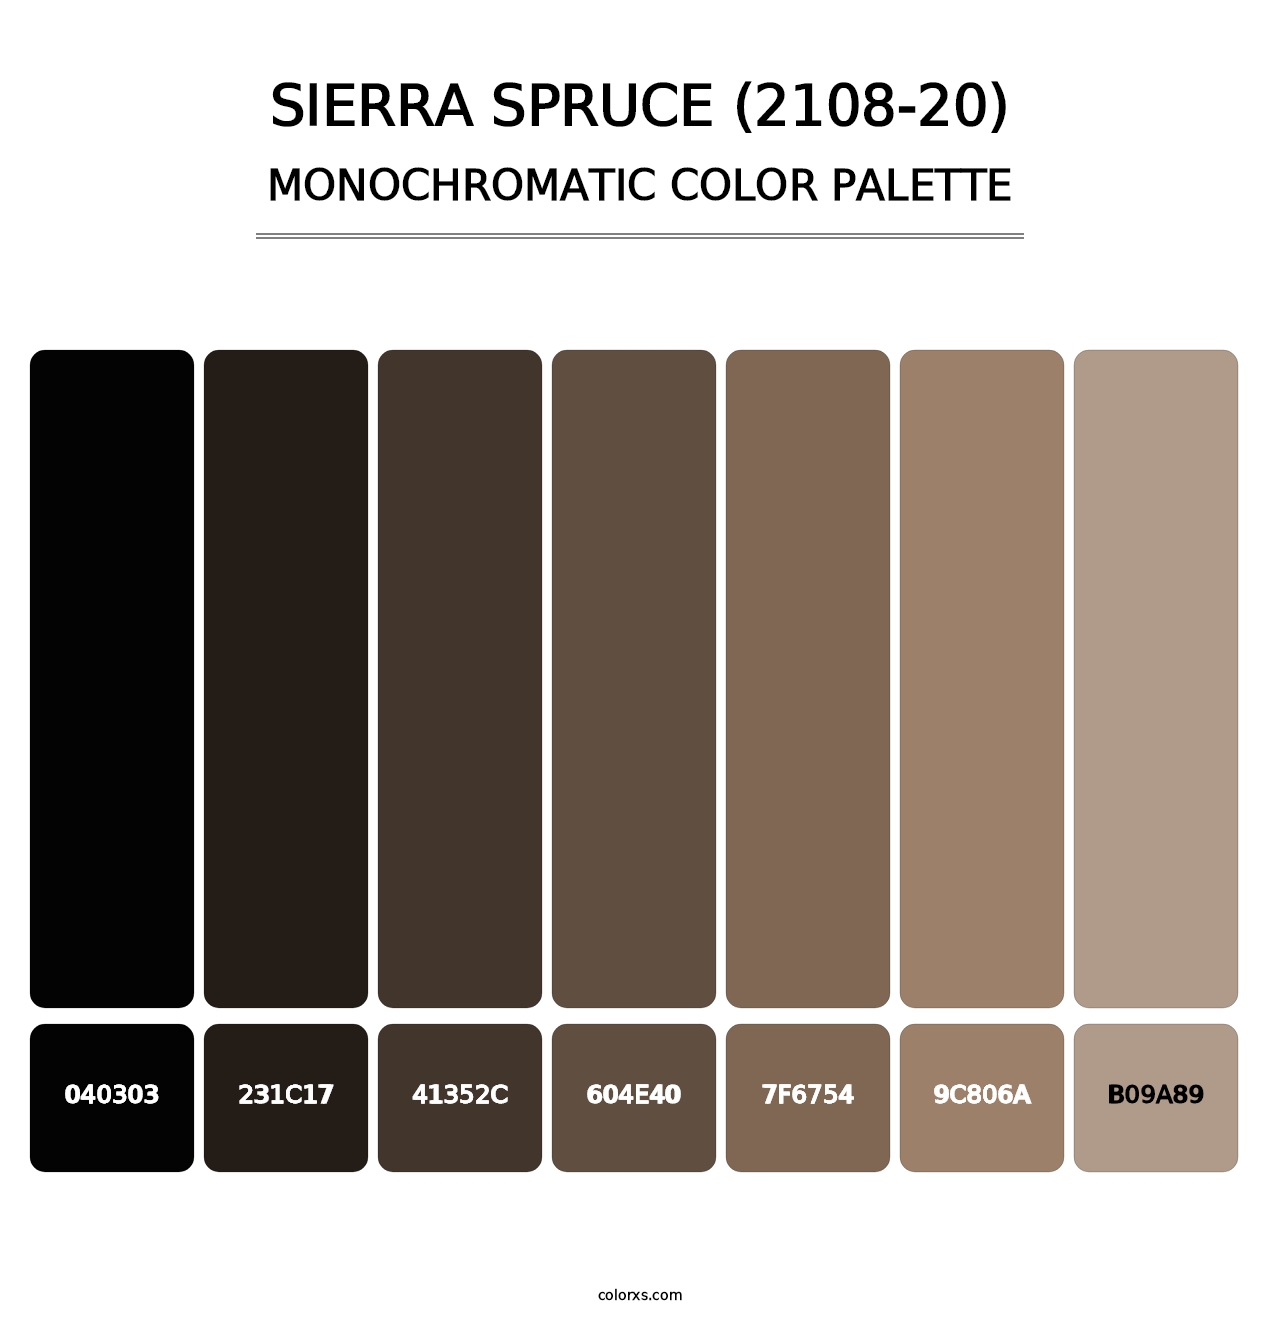 Sierra Spruce (2108-20) - Monochromatic Color Palette